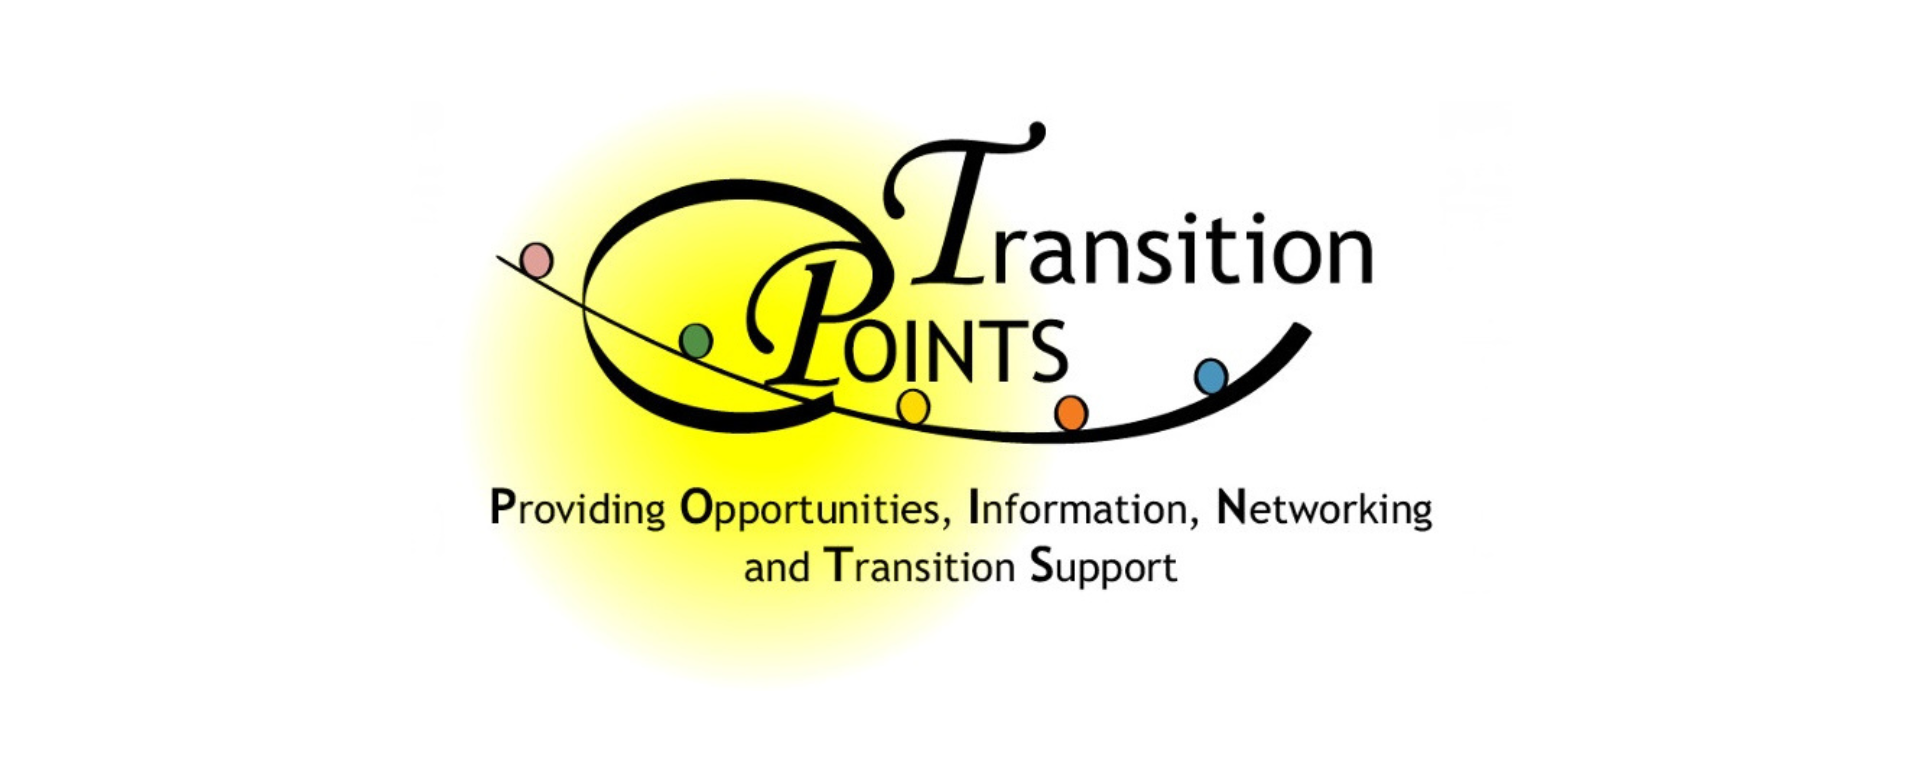 transition points